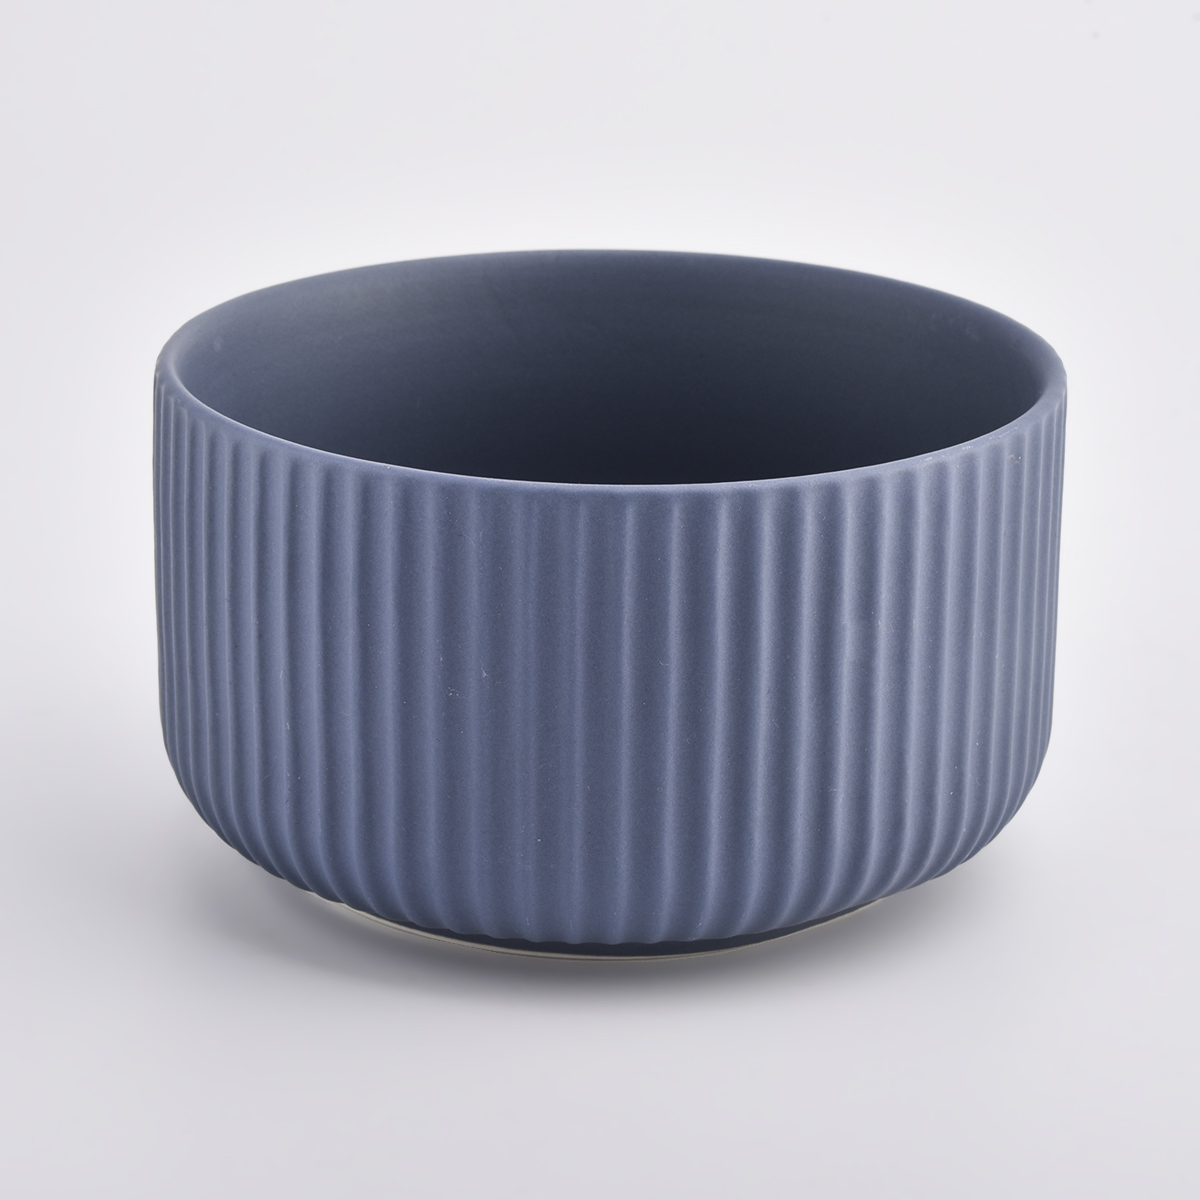 Contenitore di candele in ceramica blu opaco con linee